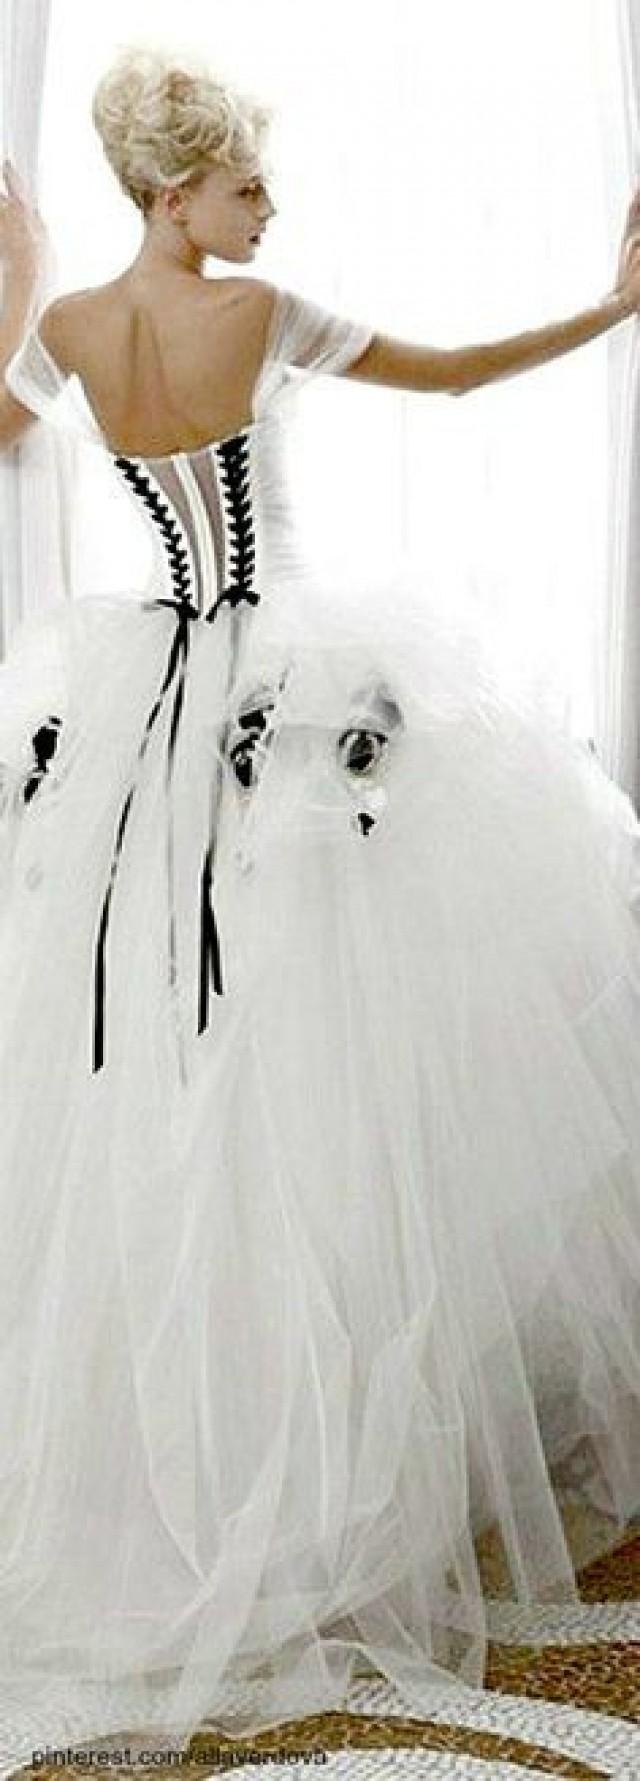 wedding photo - حفلات الزفاف - أبيض وأسود